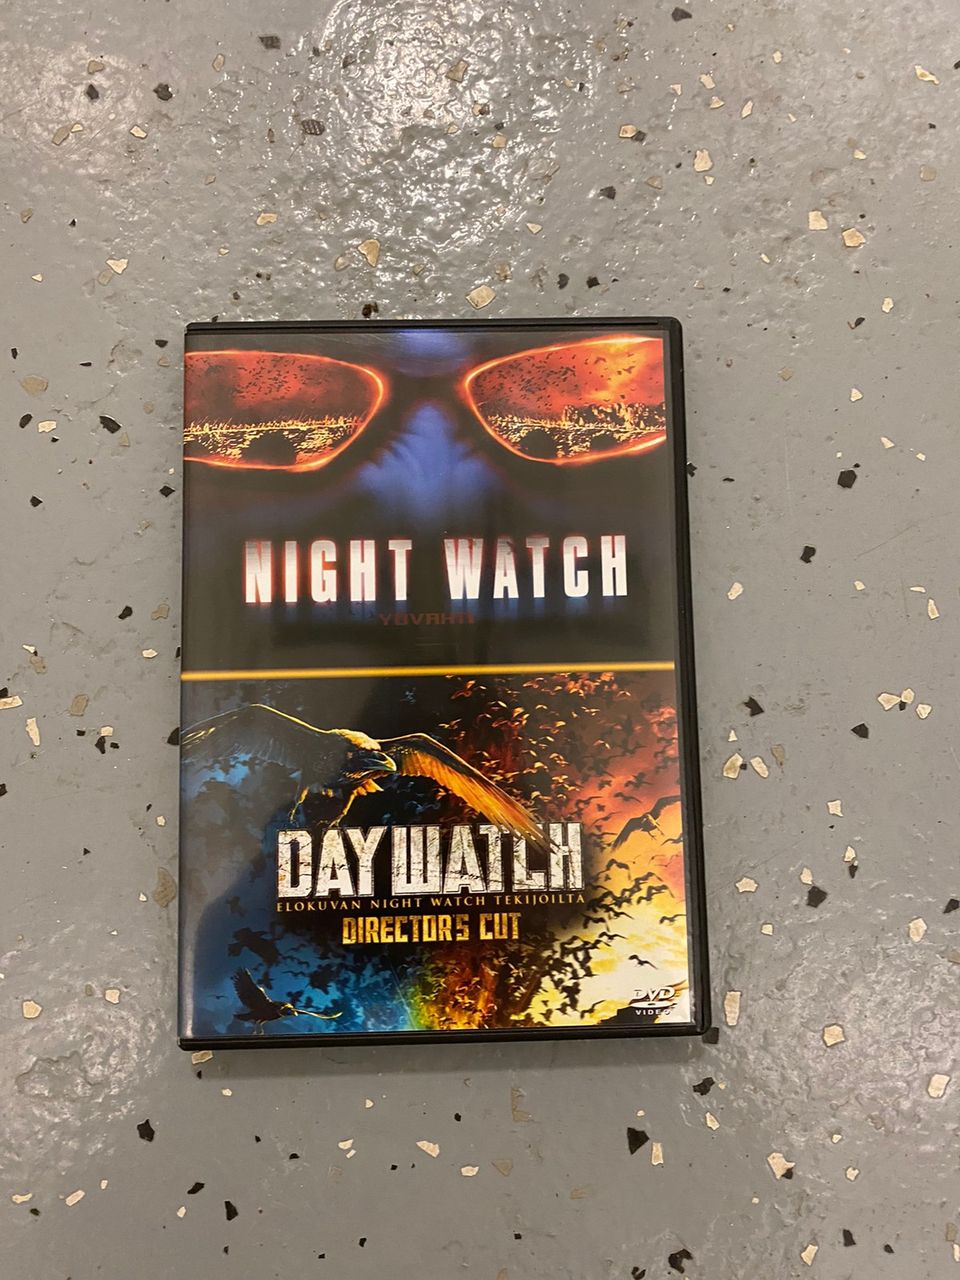 Night watch/ Day watch dvd